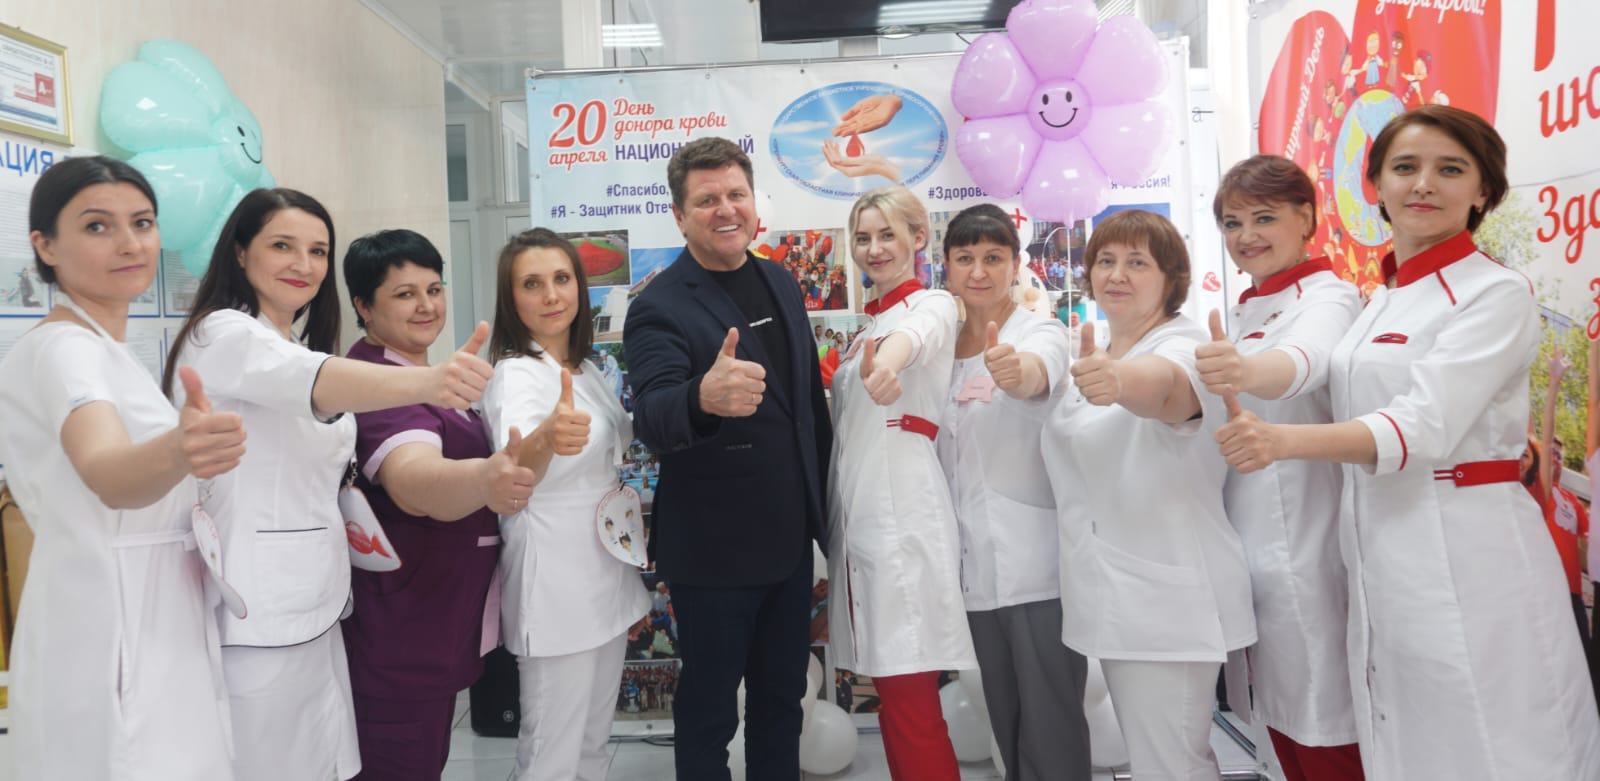 Конкурс медсестёр прошел на базе ГБУЗ "ООКСПК"